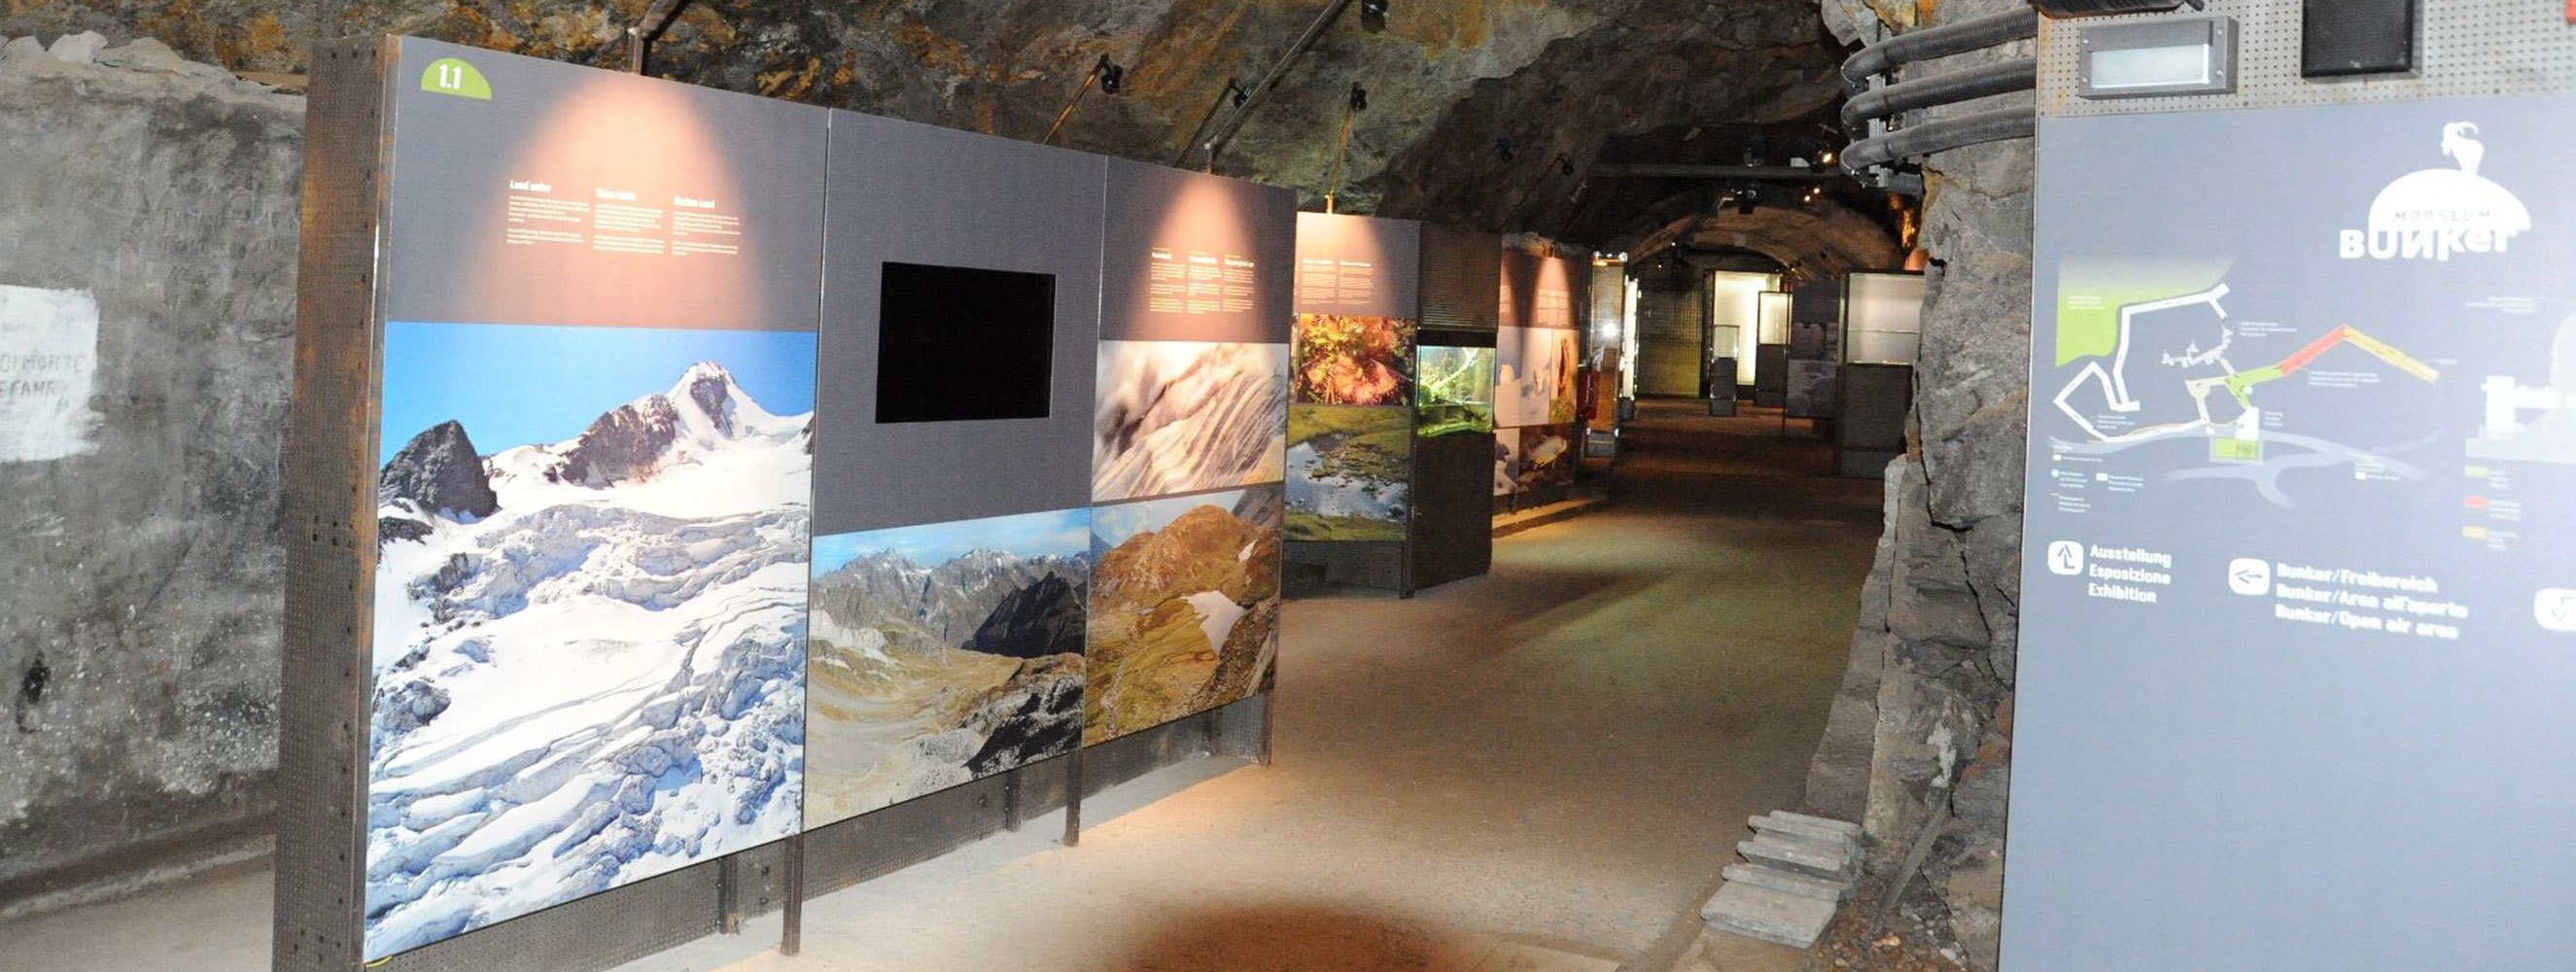 Bunker Mooseum in Val Passiria